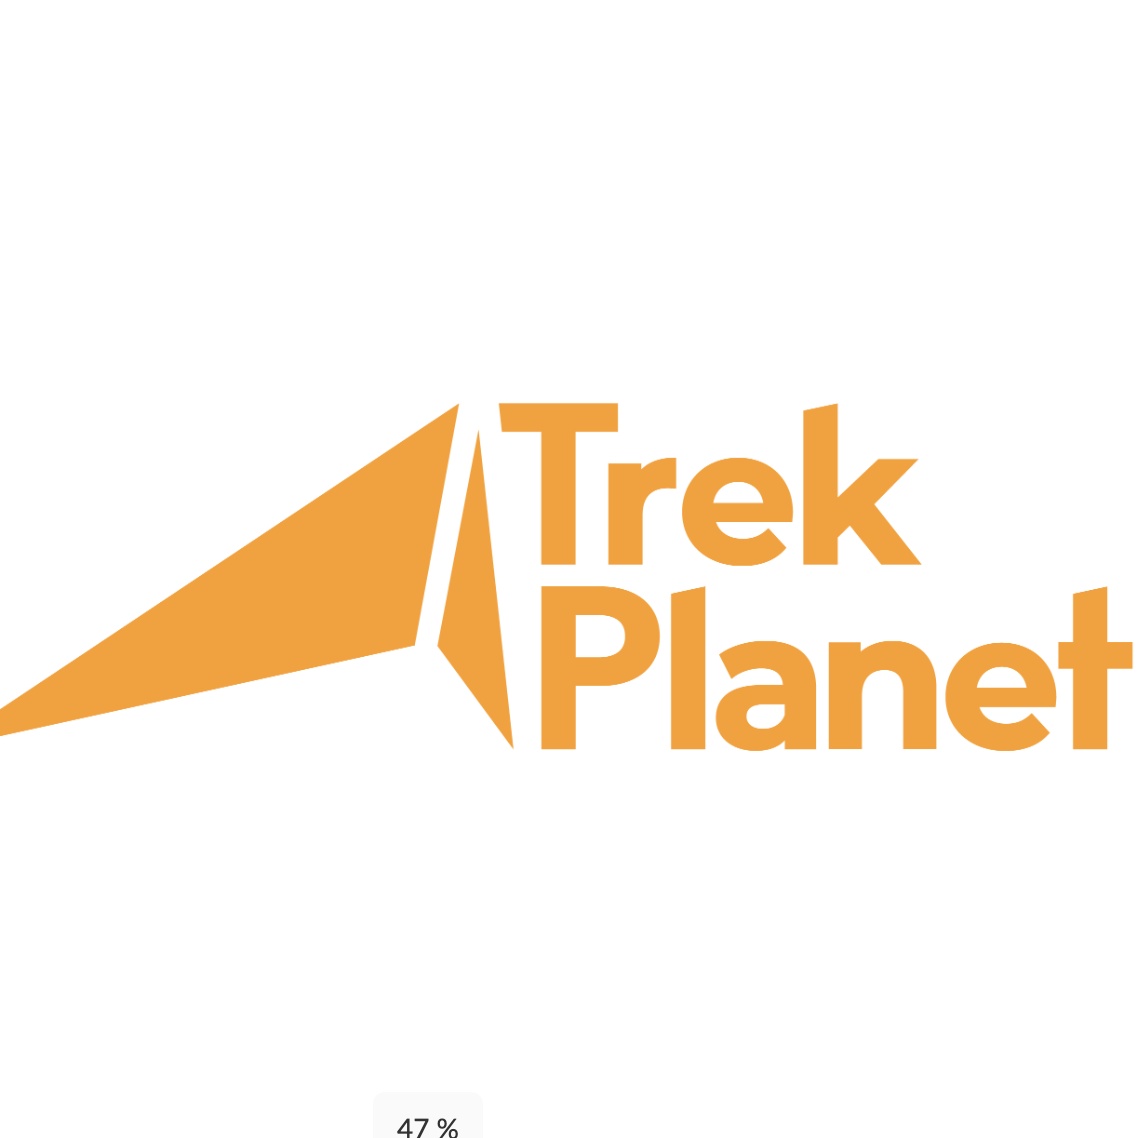 Команда Trek Planet